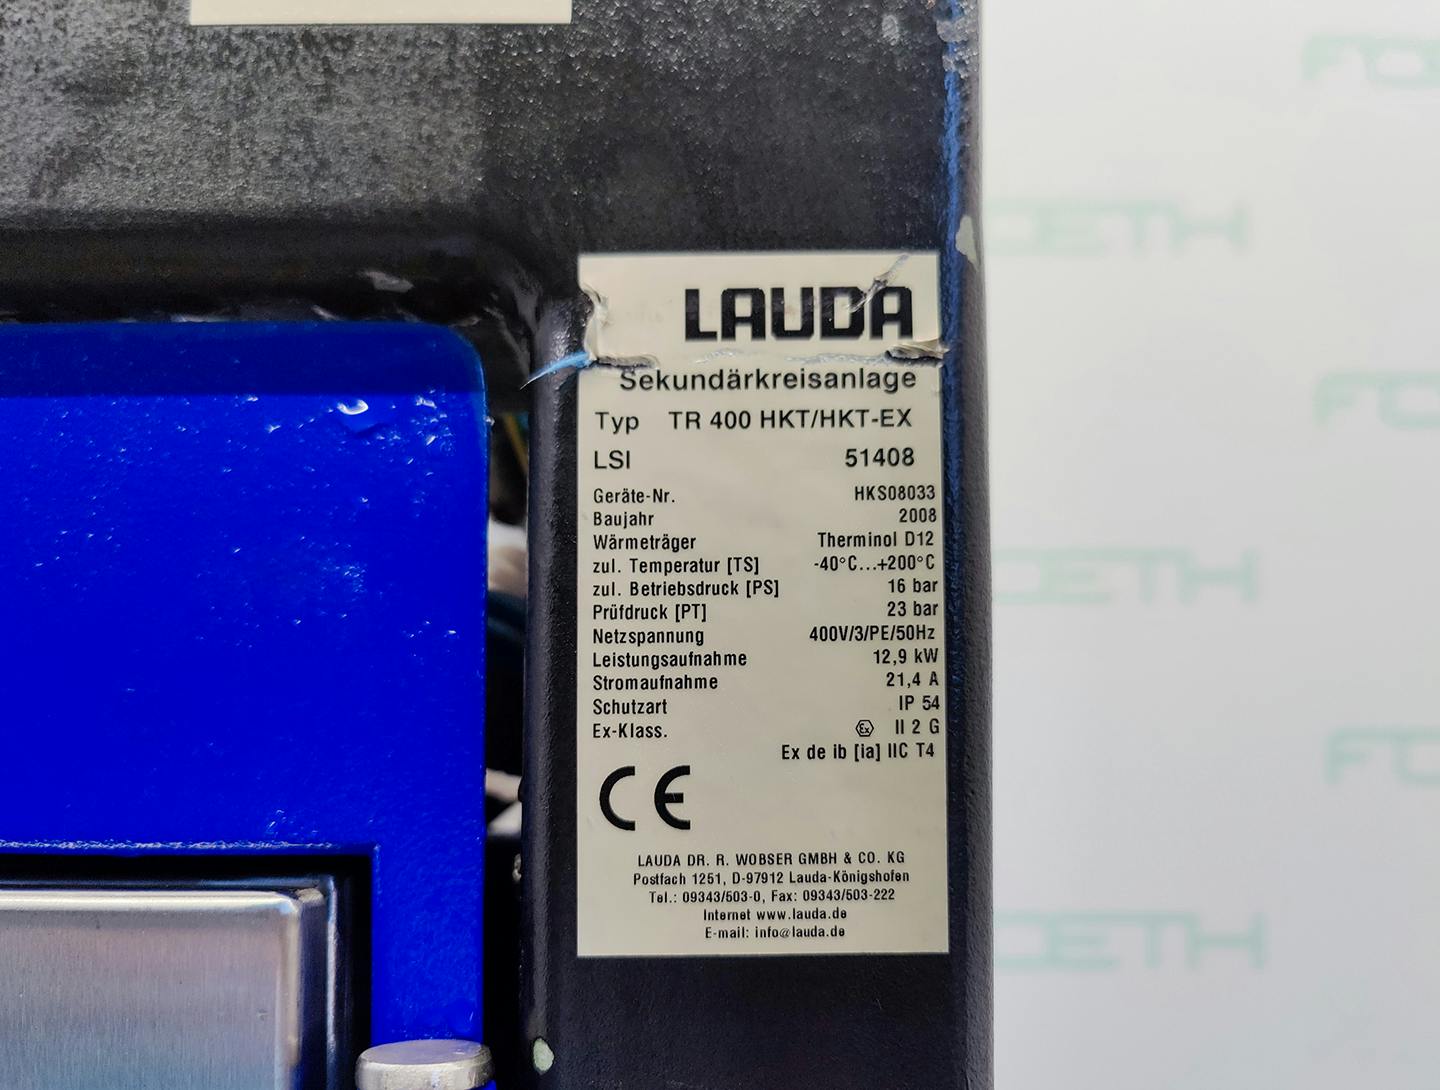 Lauda TR400 HKT/HKT-EX "secondary circuit system" - Temperature control unit - image 6